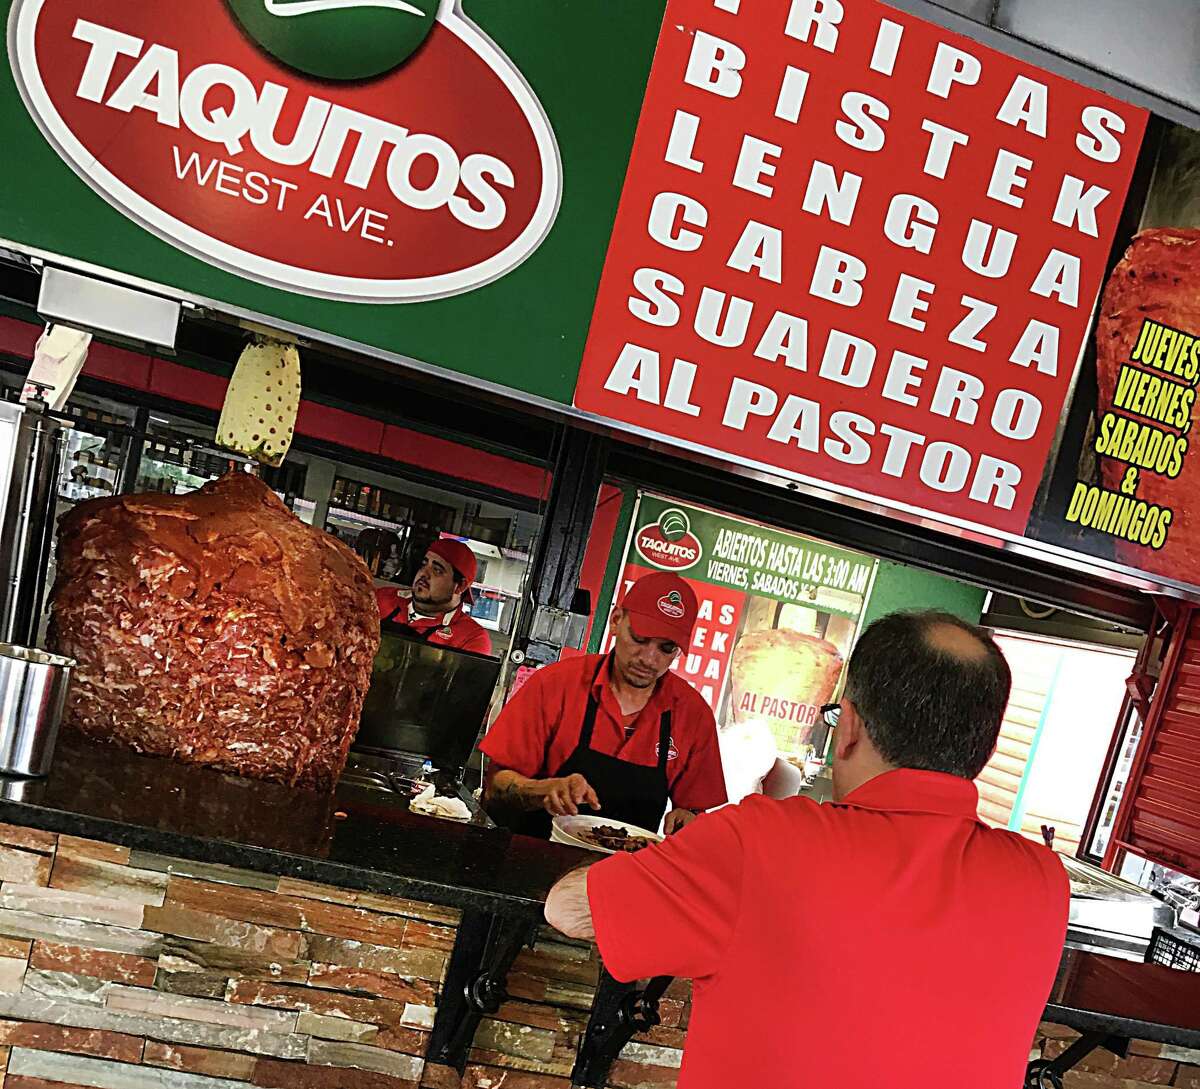 Taquitos West Ave. Douglas Mendizabal: Stop by Thursday-Sunday for Al Pastor tacos.